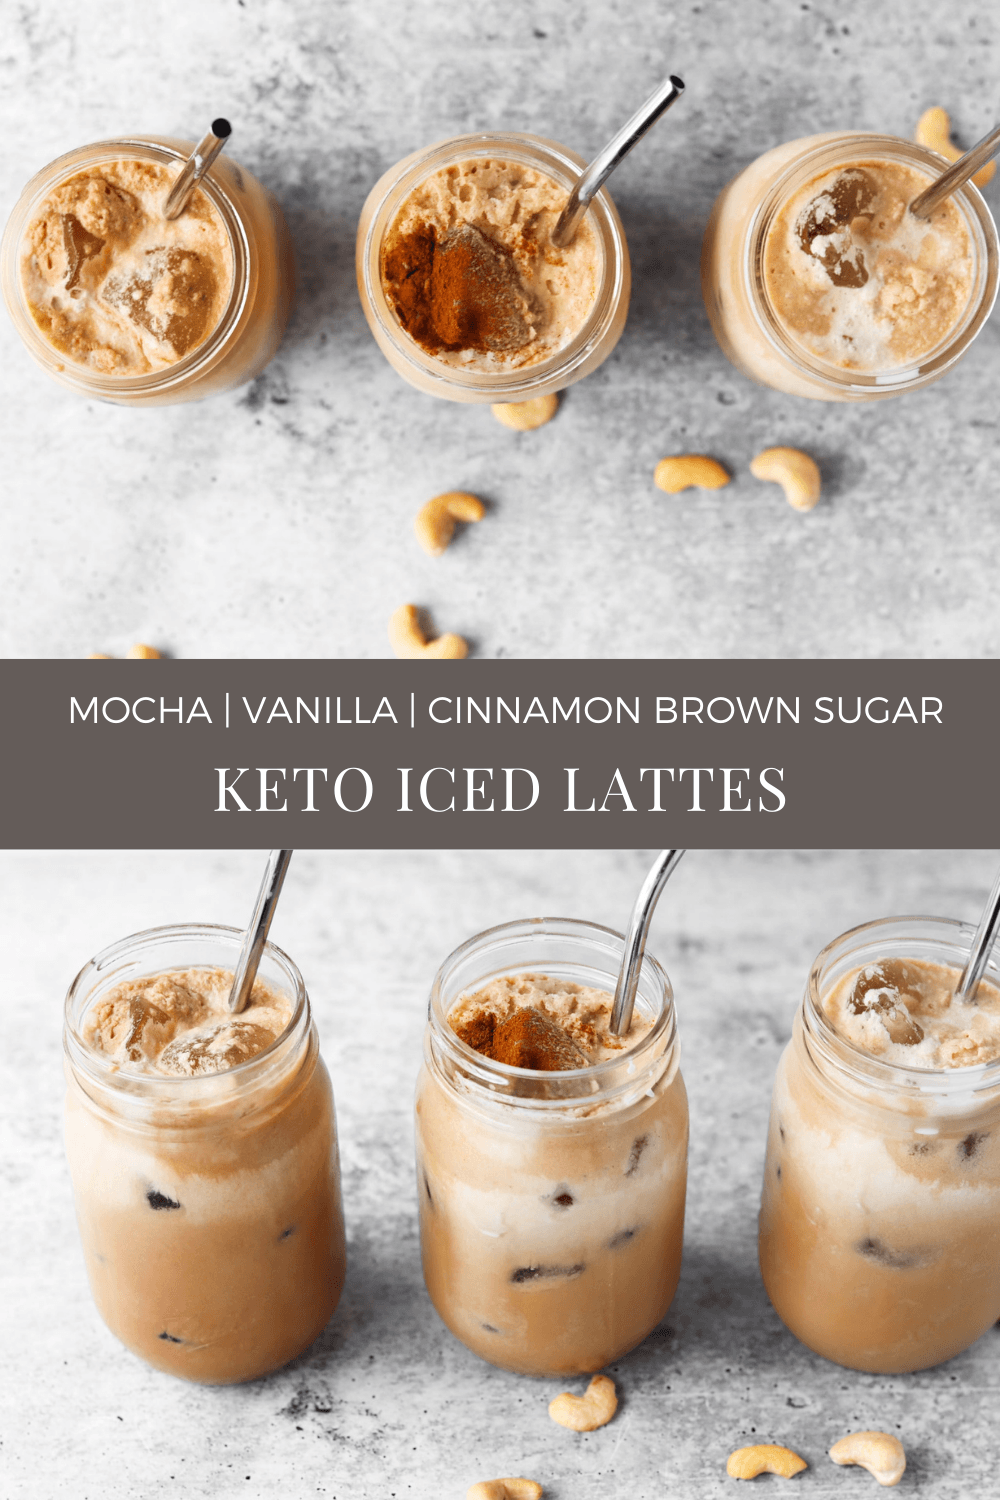 Keto Iced Latte Recipes